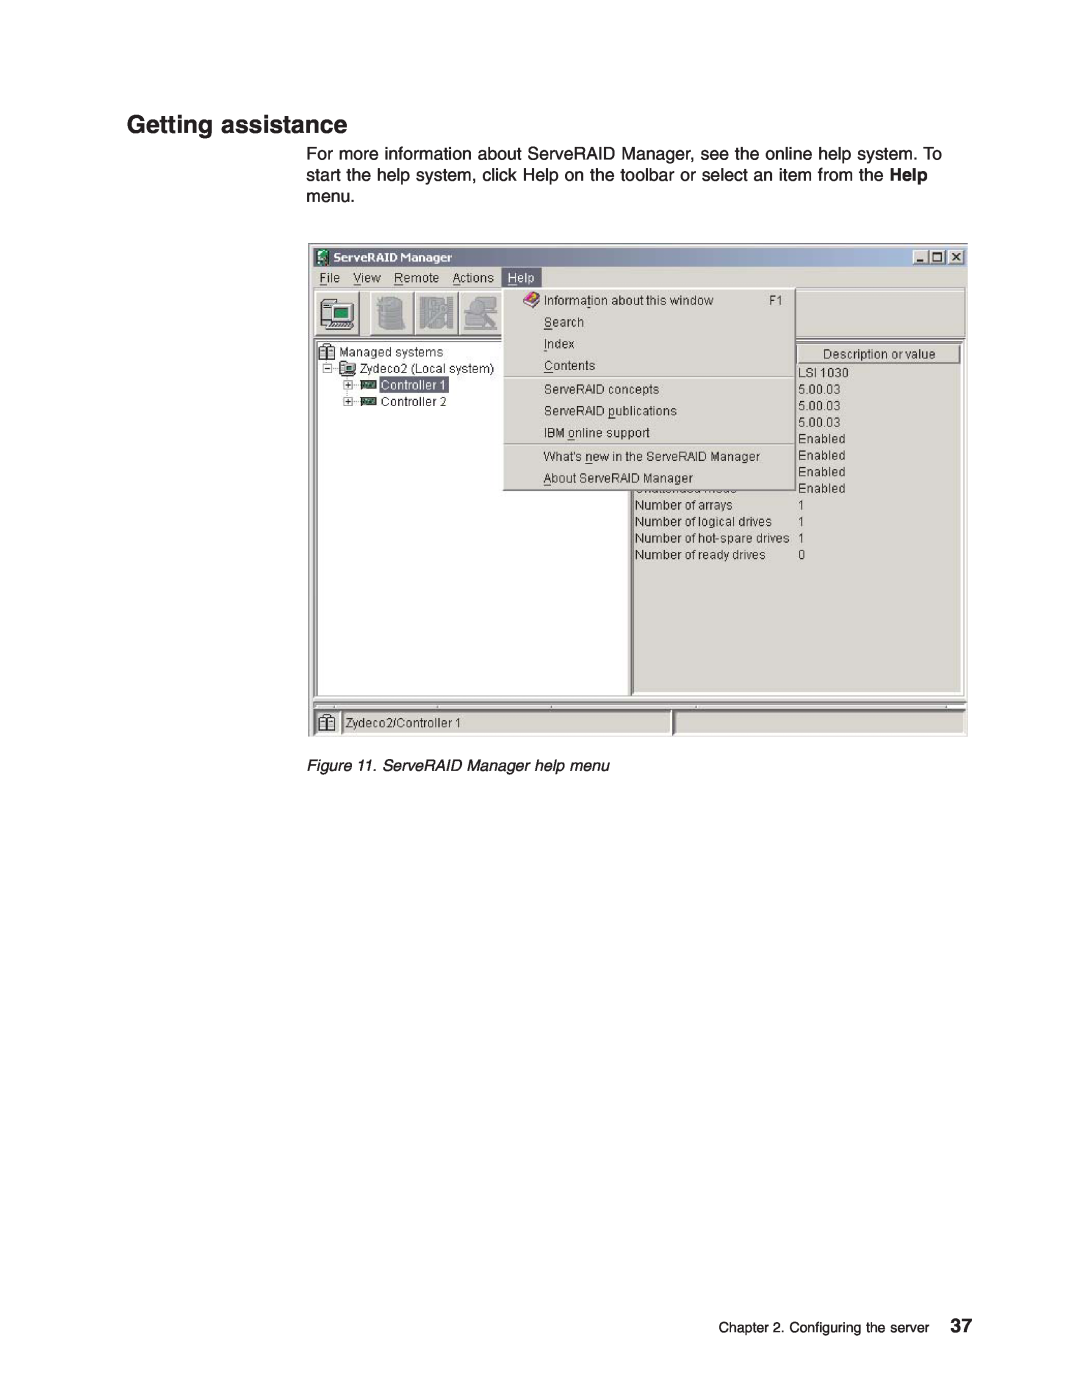 IBM 8870 manual Getting assistance, ServeRAID Manager help menu 